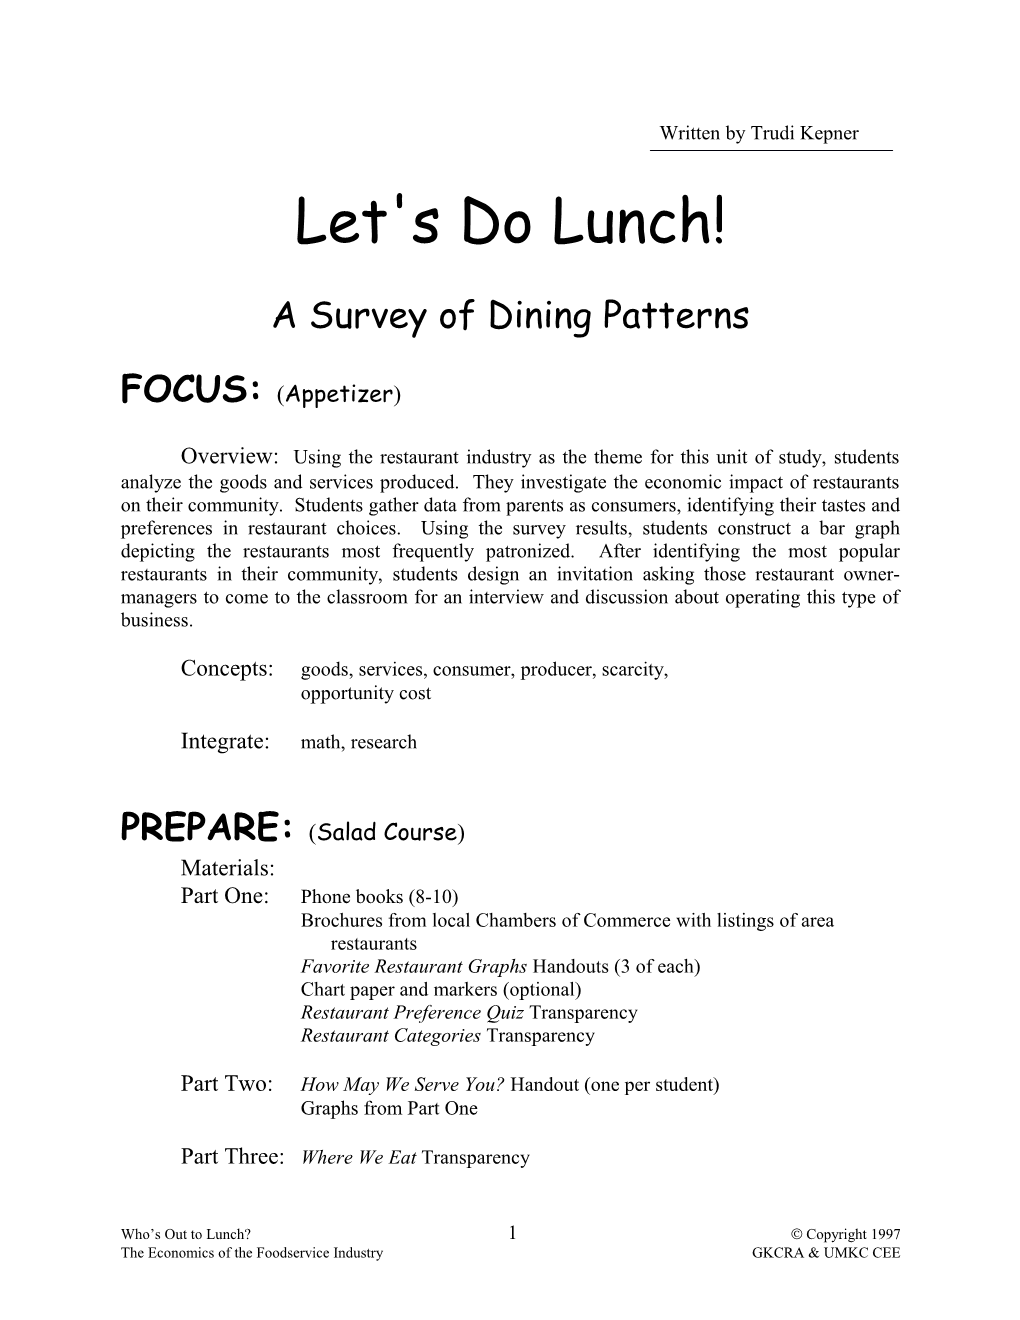 A Survey of Dining Patterns